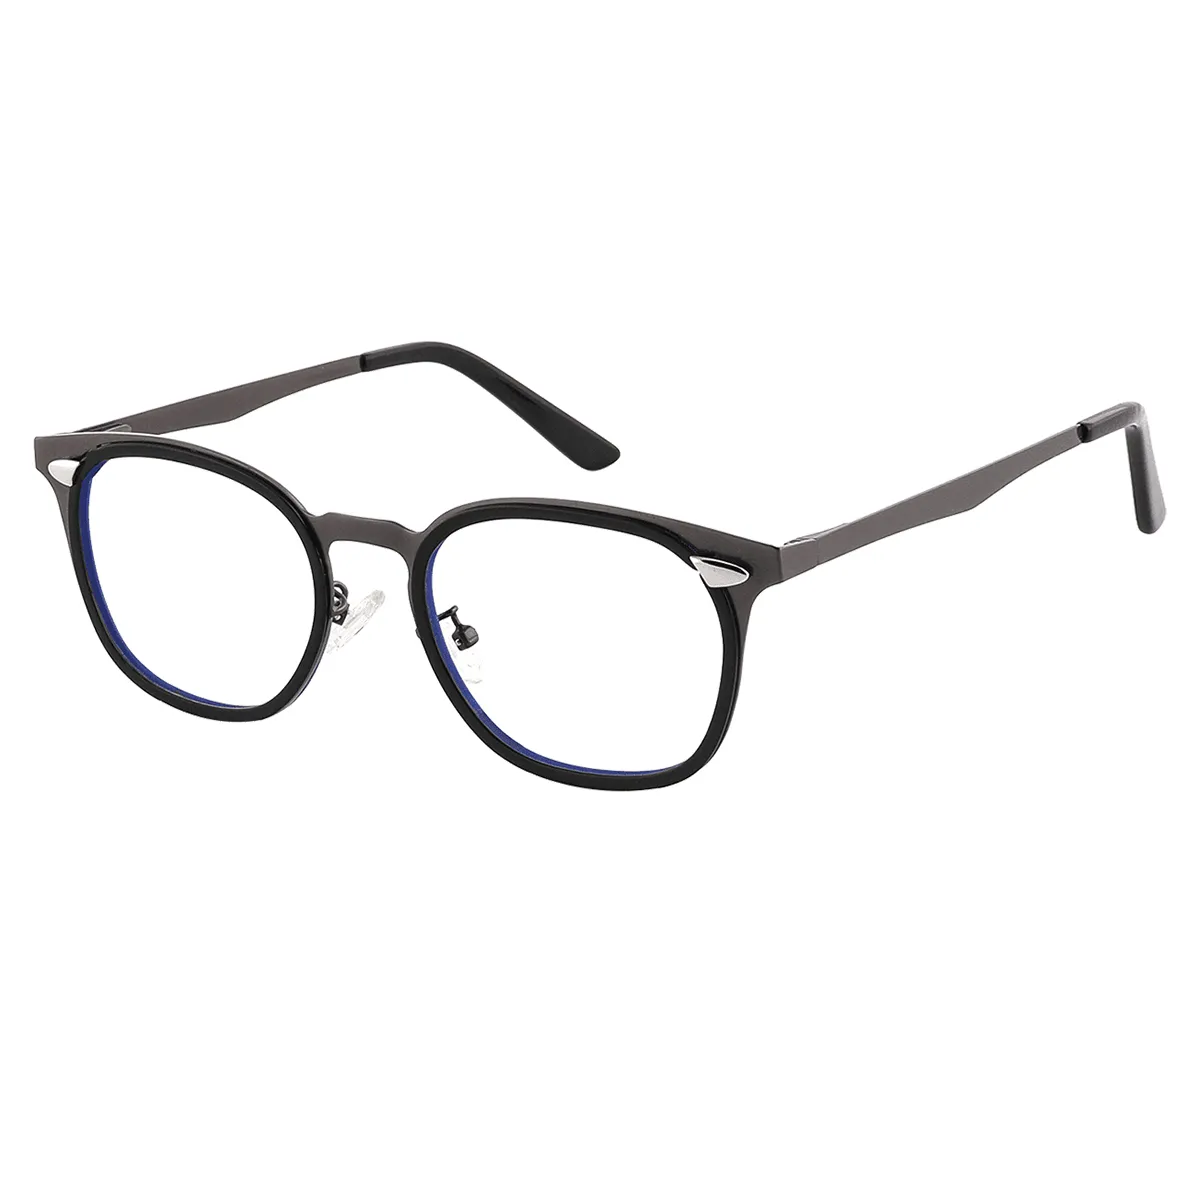 Lind - Oval Black Glasses for Men & Women